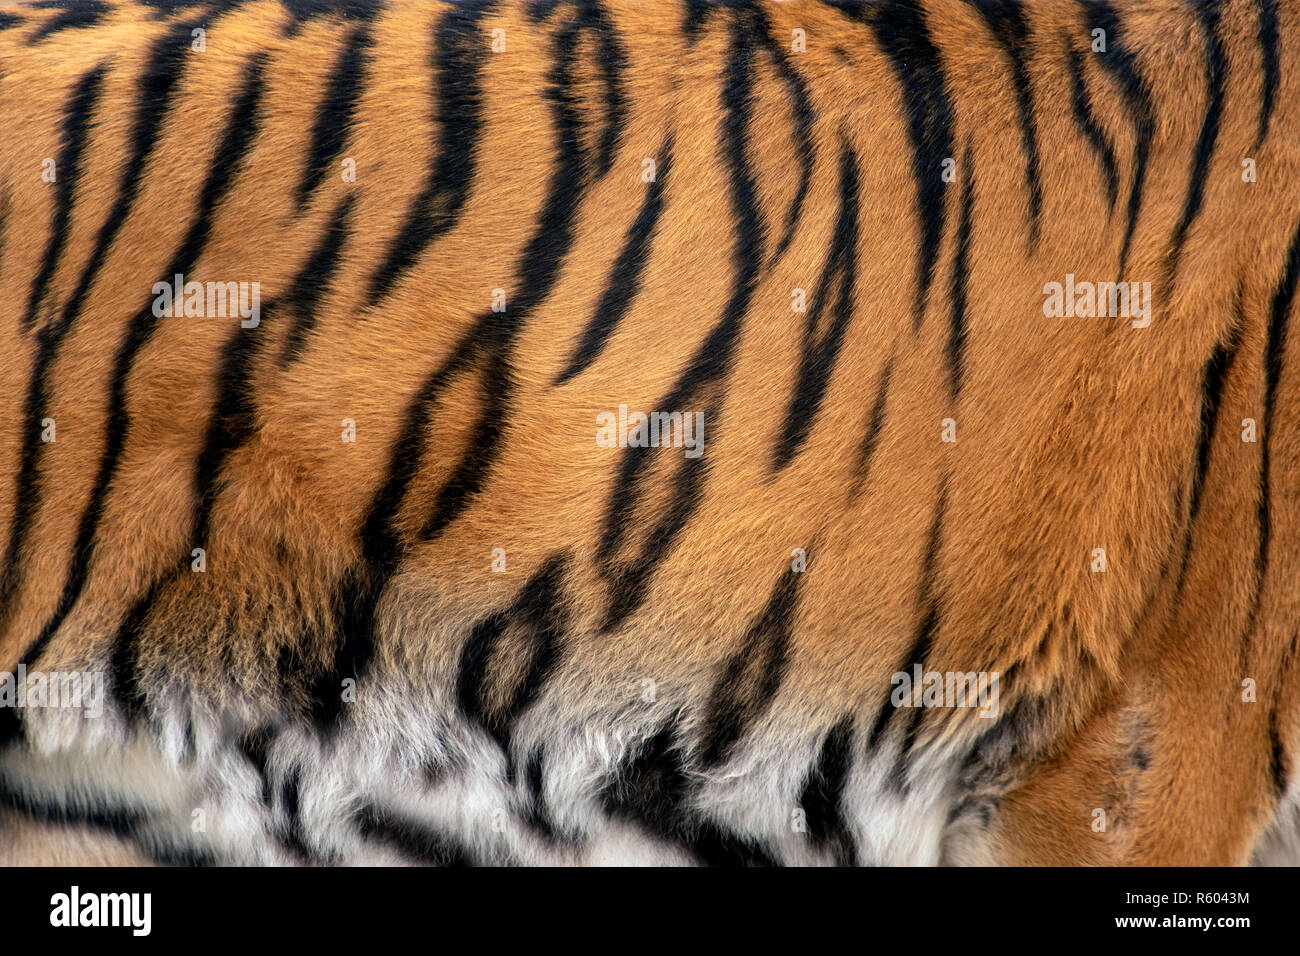 Tiger Skin Texture